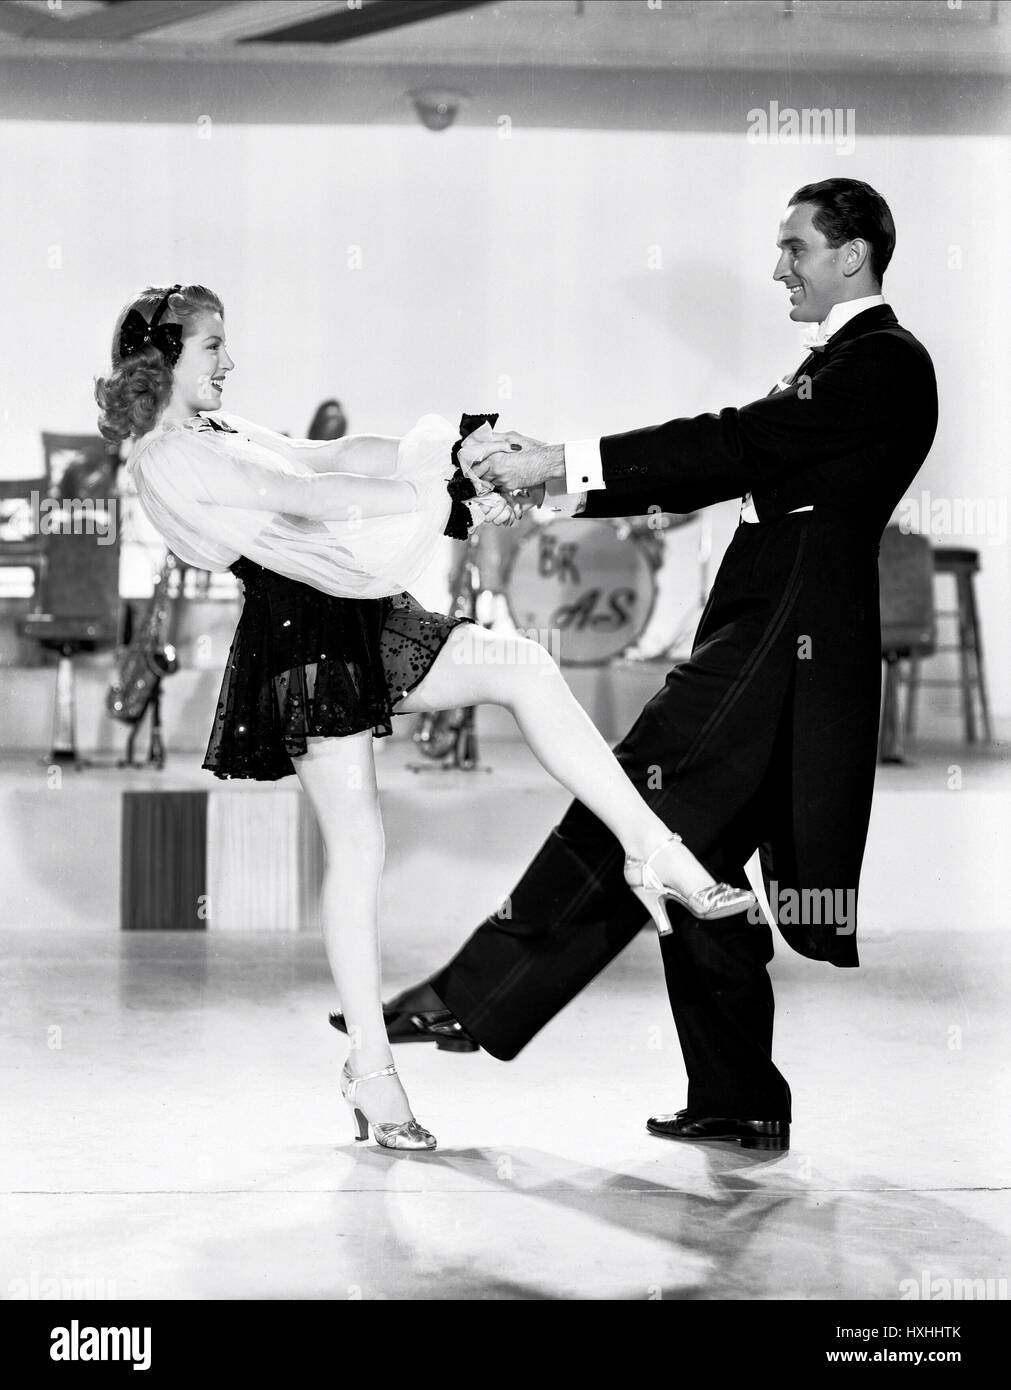 LANA TURNER, ARTIE SHAW, DANCING CO-ED, 1939 Stock Photo - Alamy